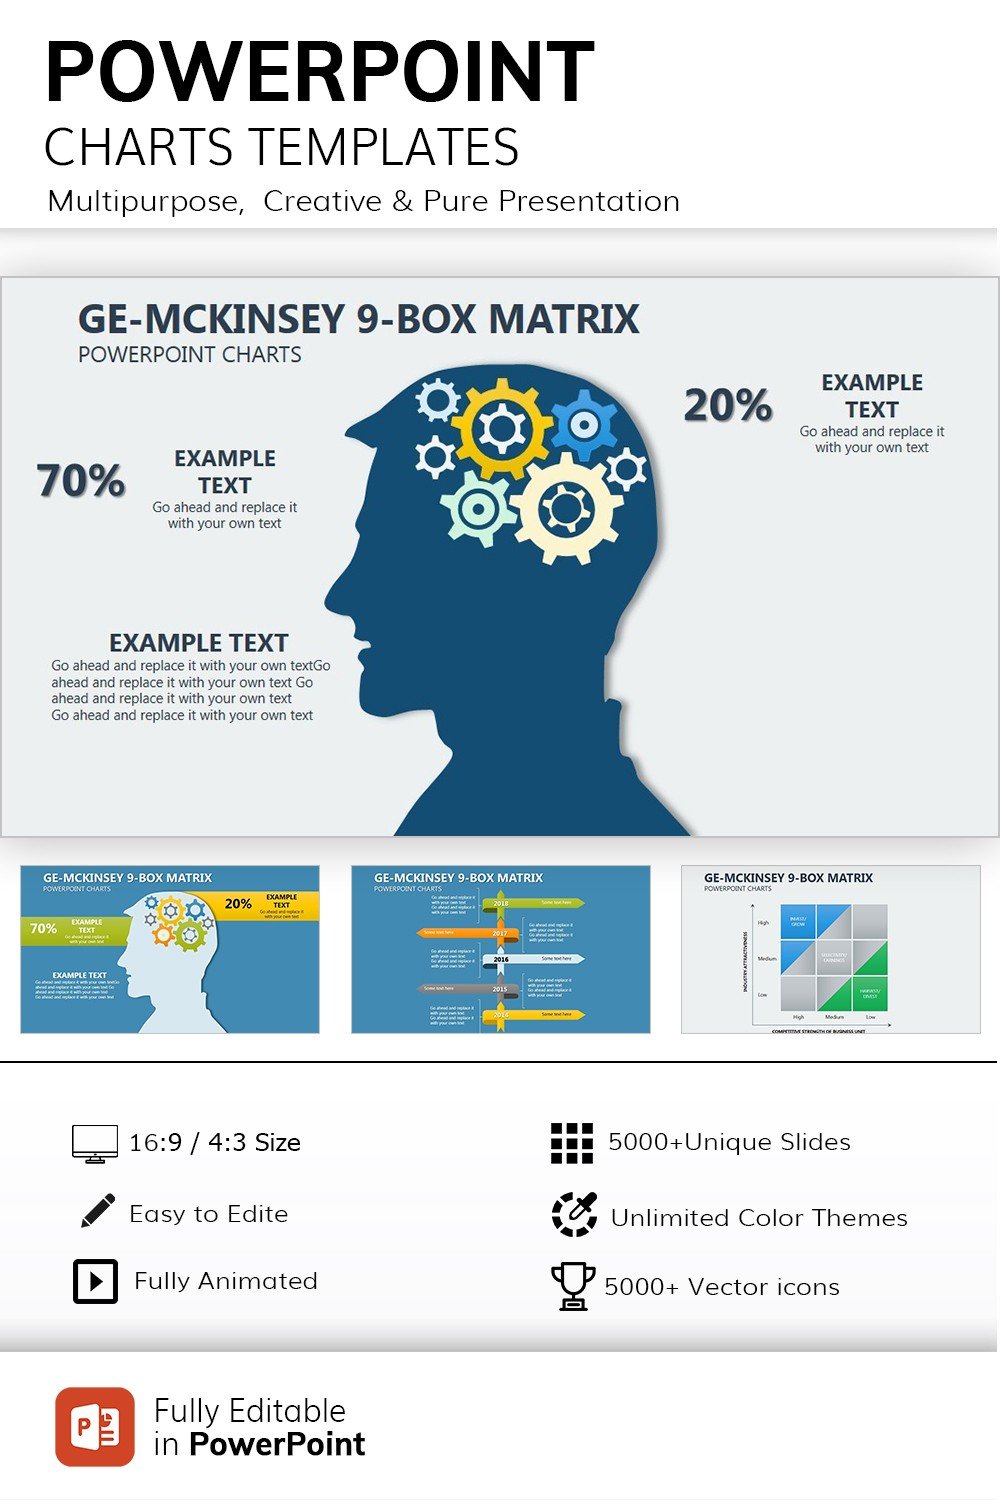 McKinsey Matrix PowerPoint Charts Templates